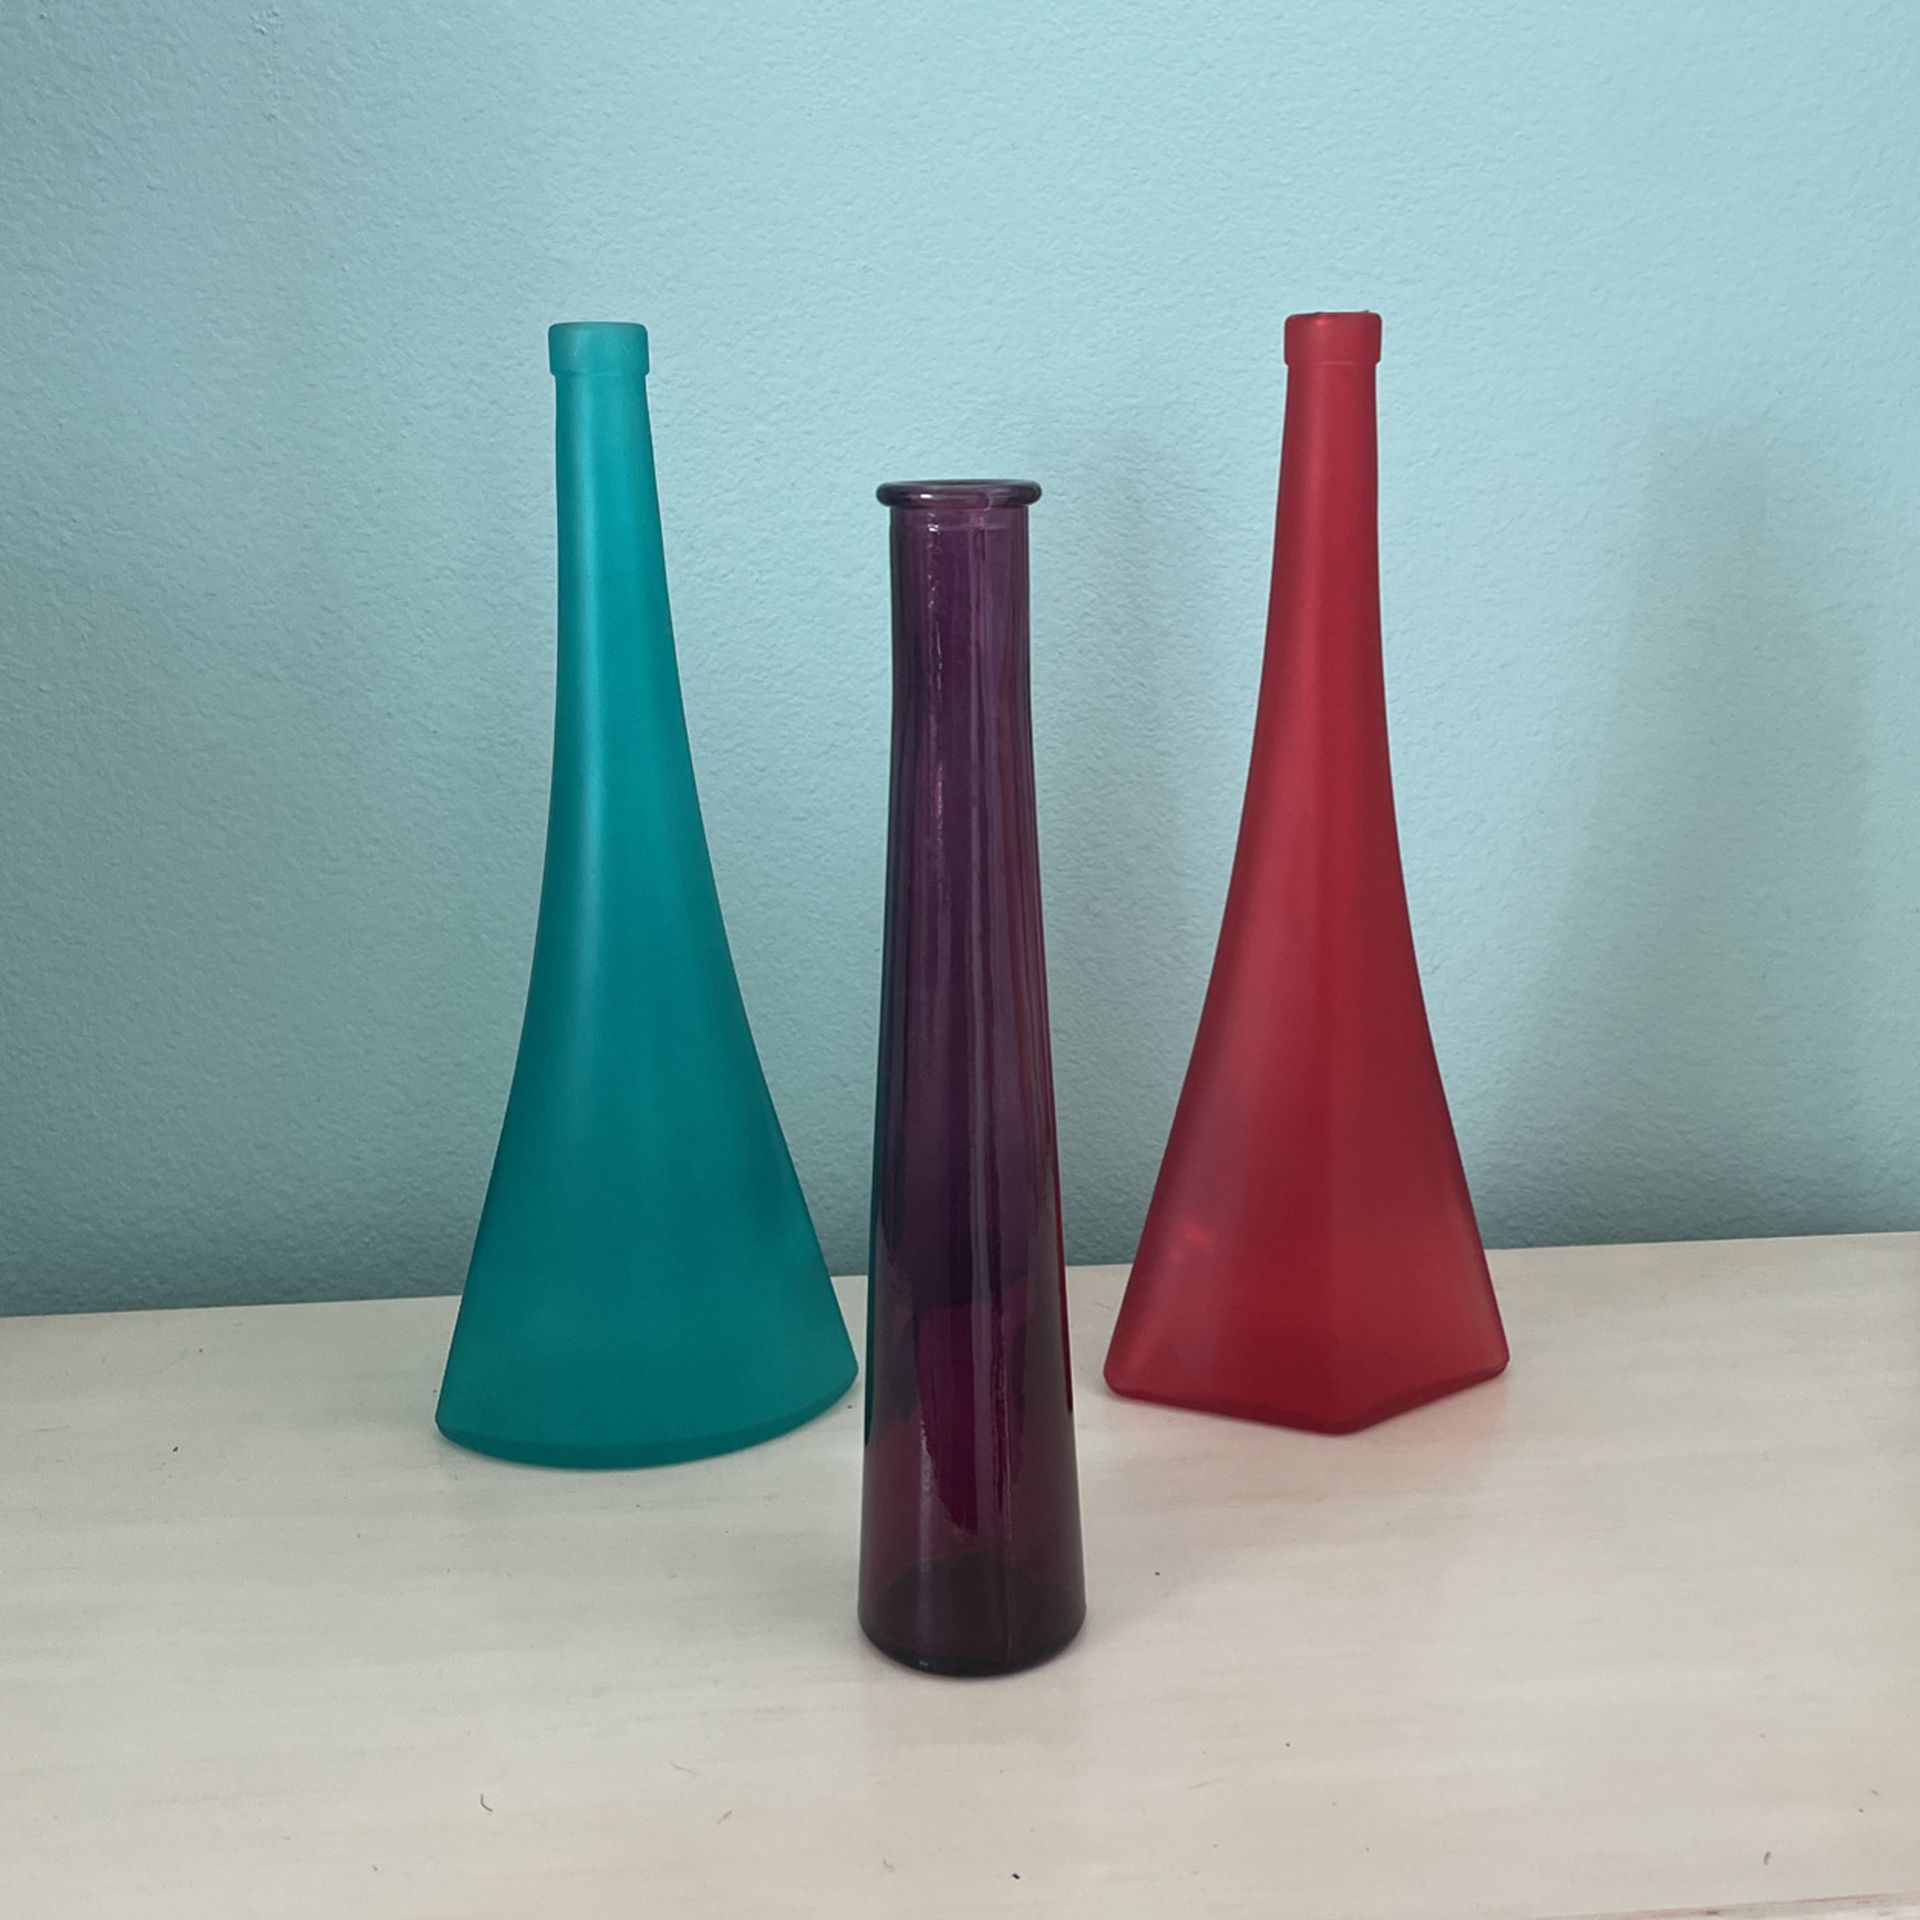 Vases- Tall, Skinny